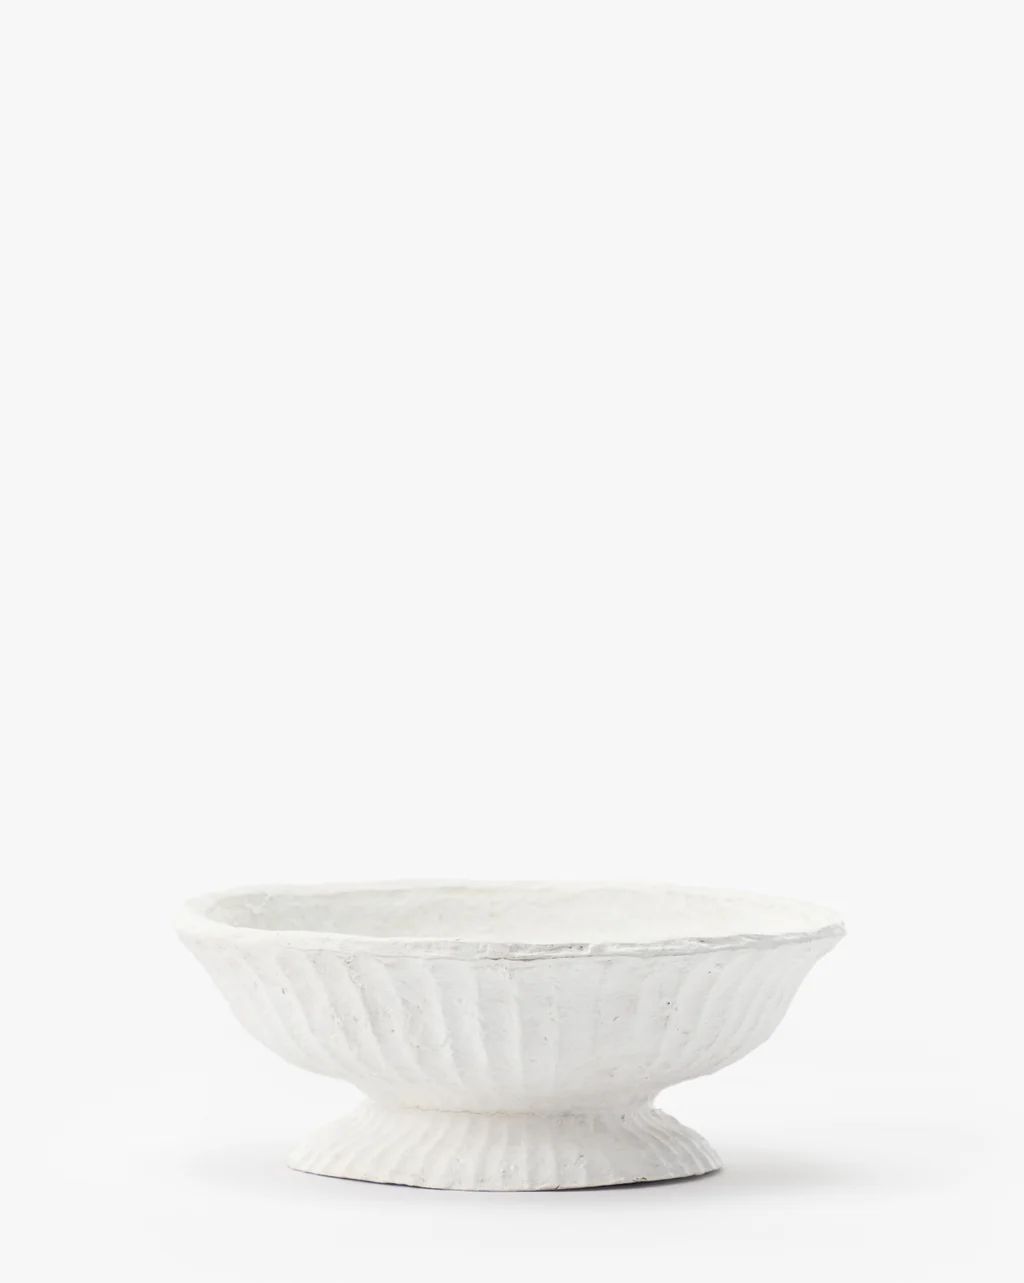 Arrieta Paper Mache Bowl | McGee & Co.